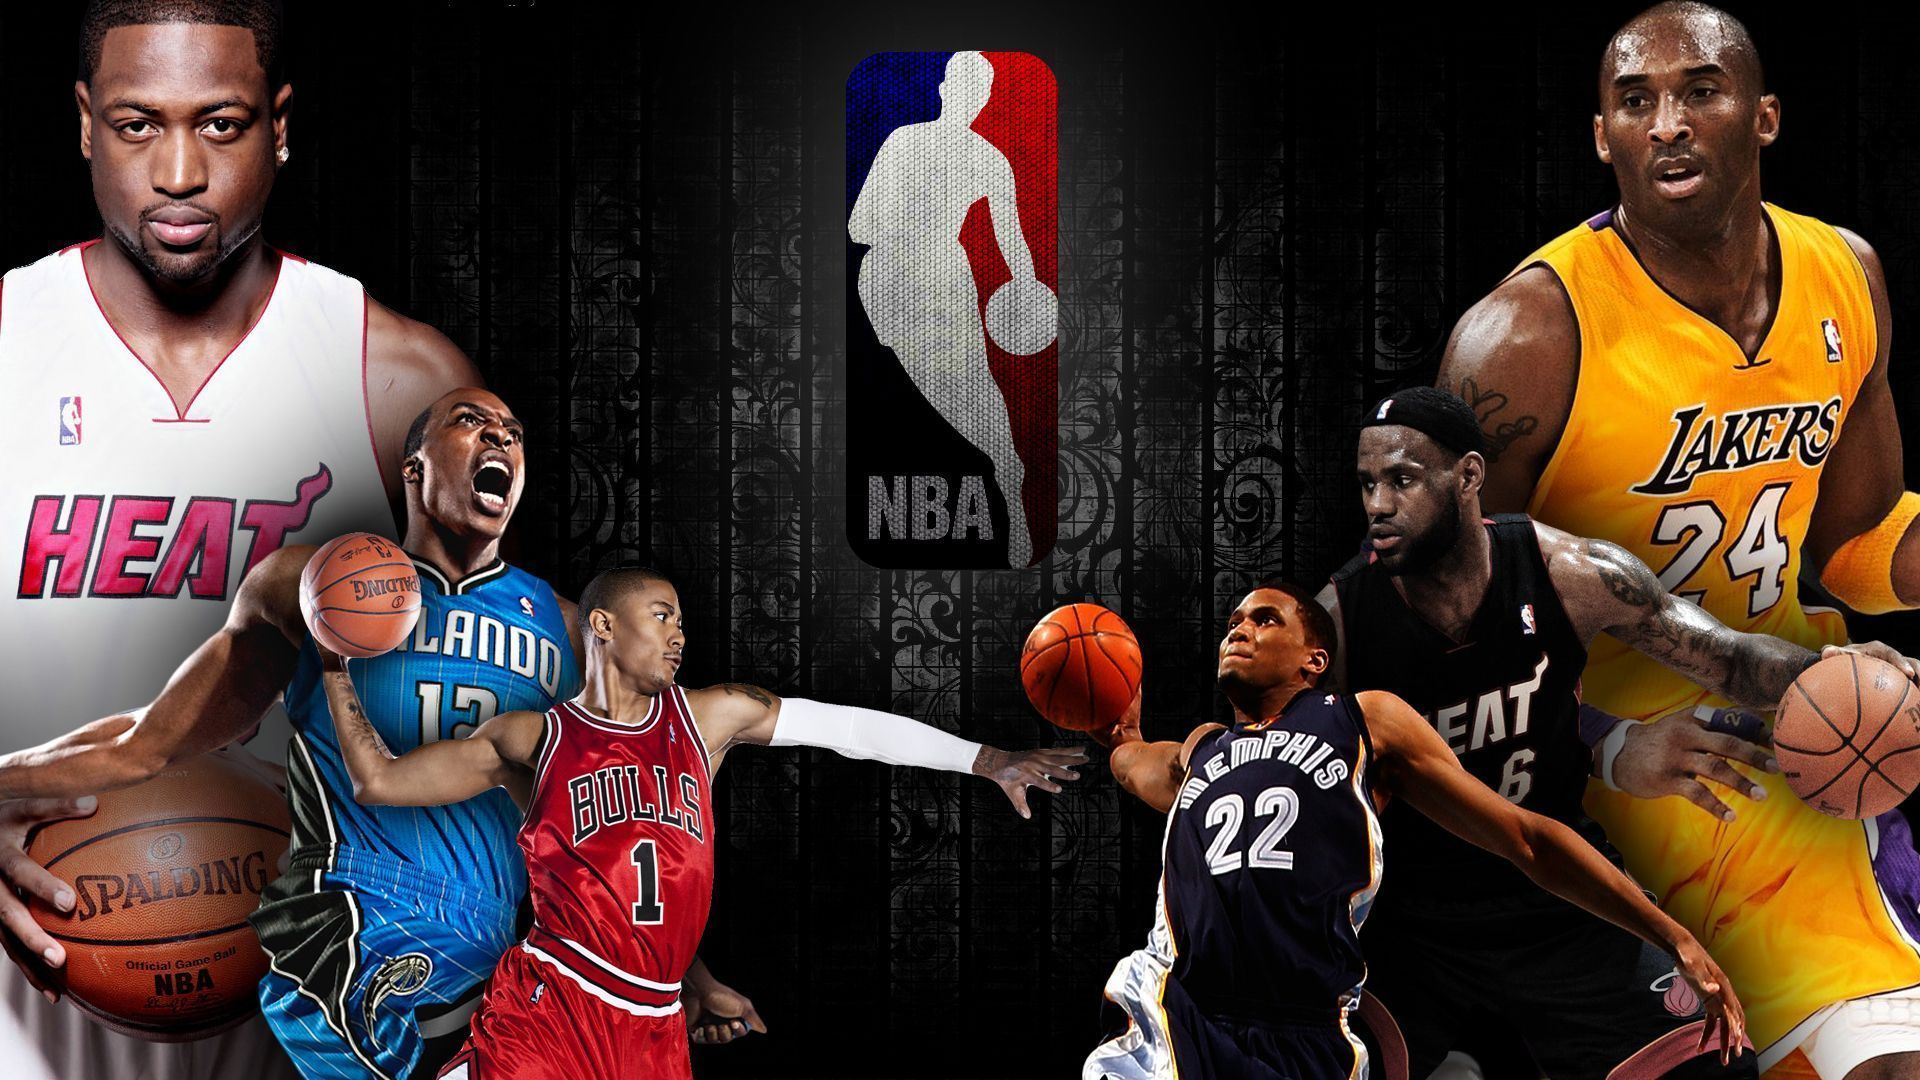 NBA Wallpaper Pictures NK3 - WALLPAPEROX.COM